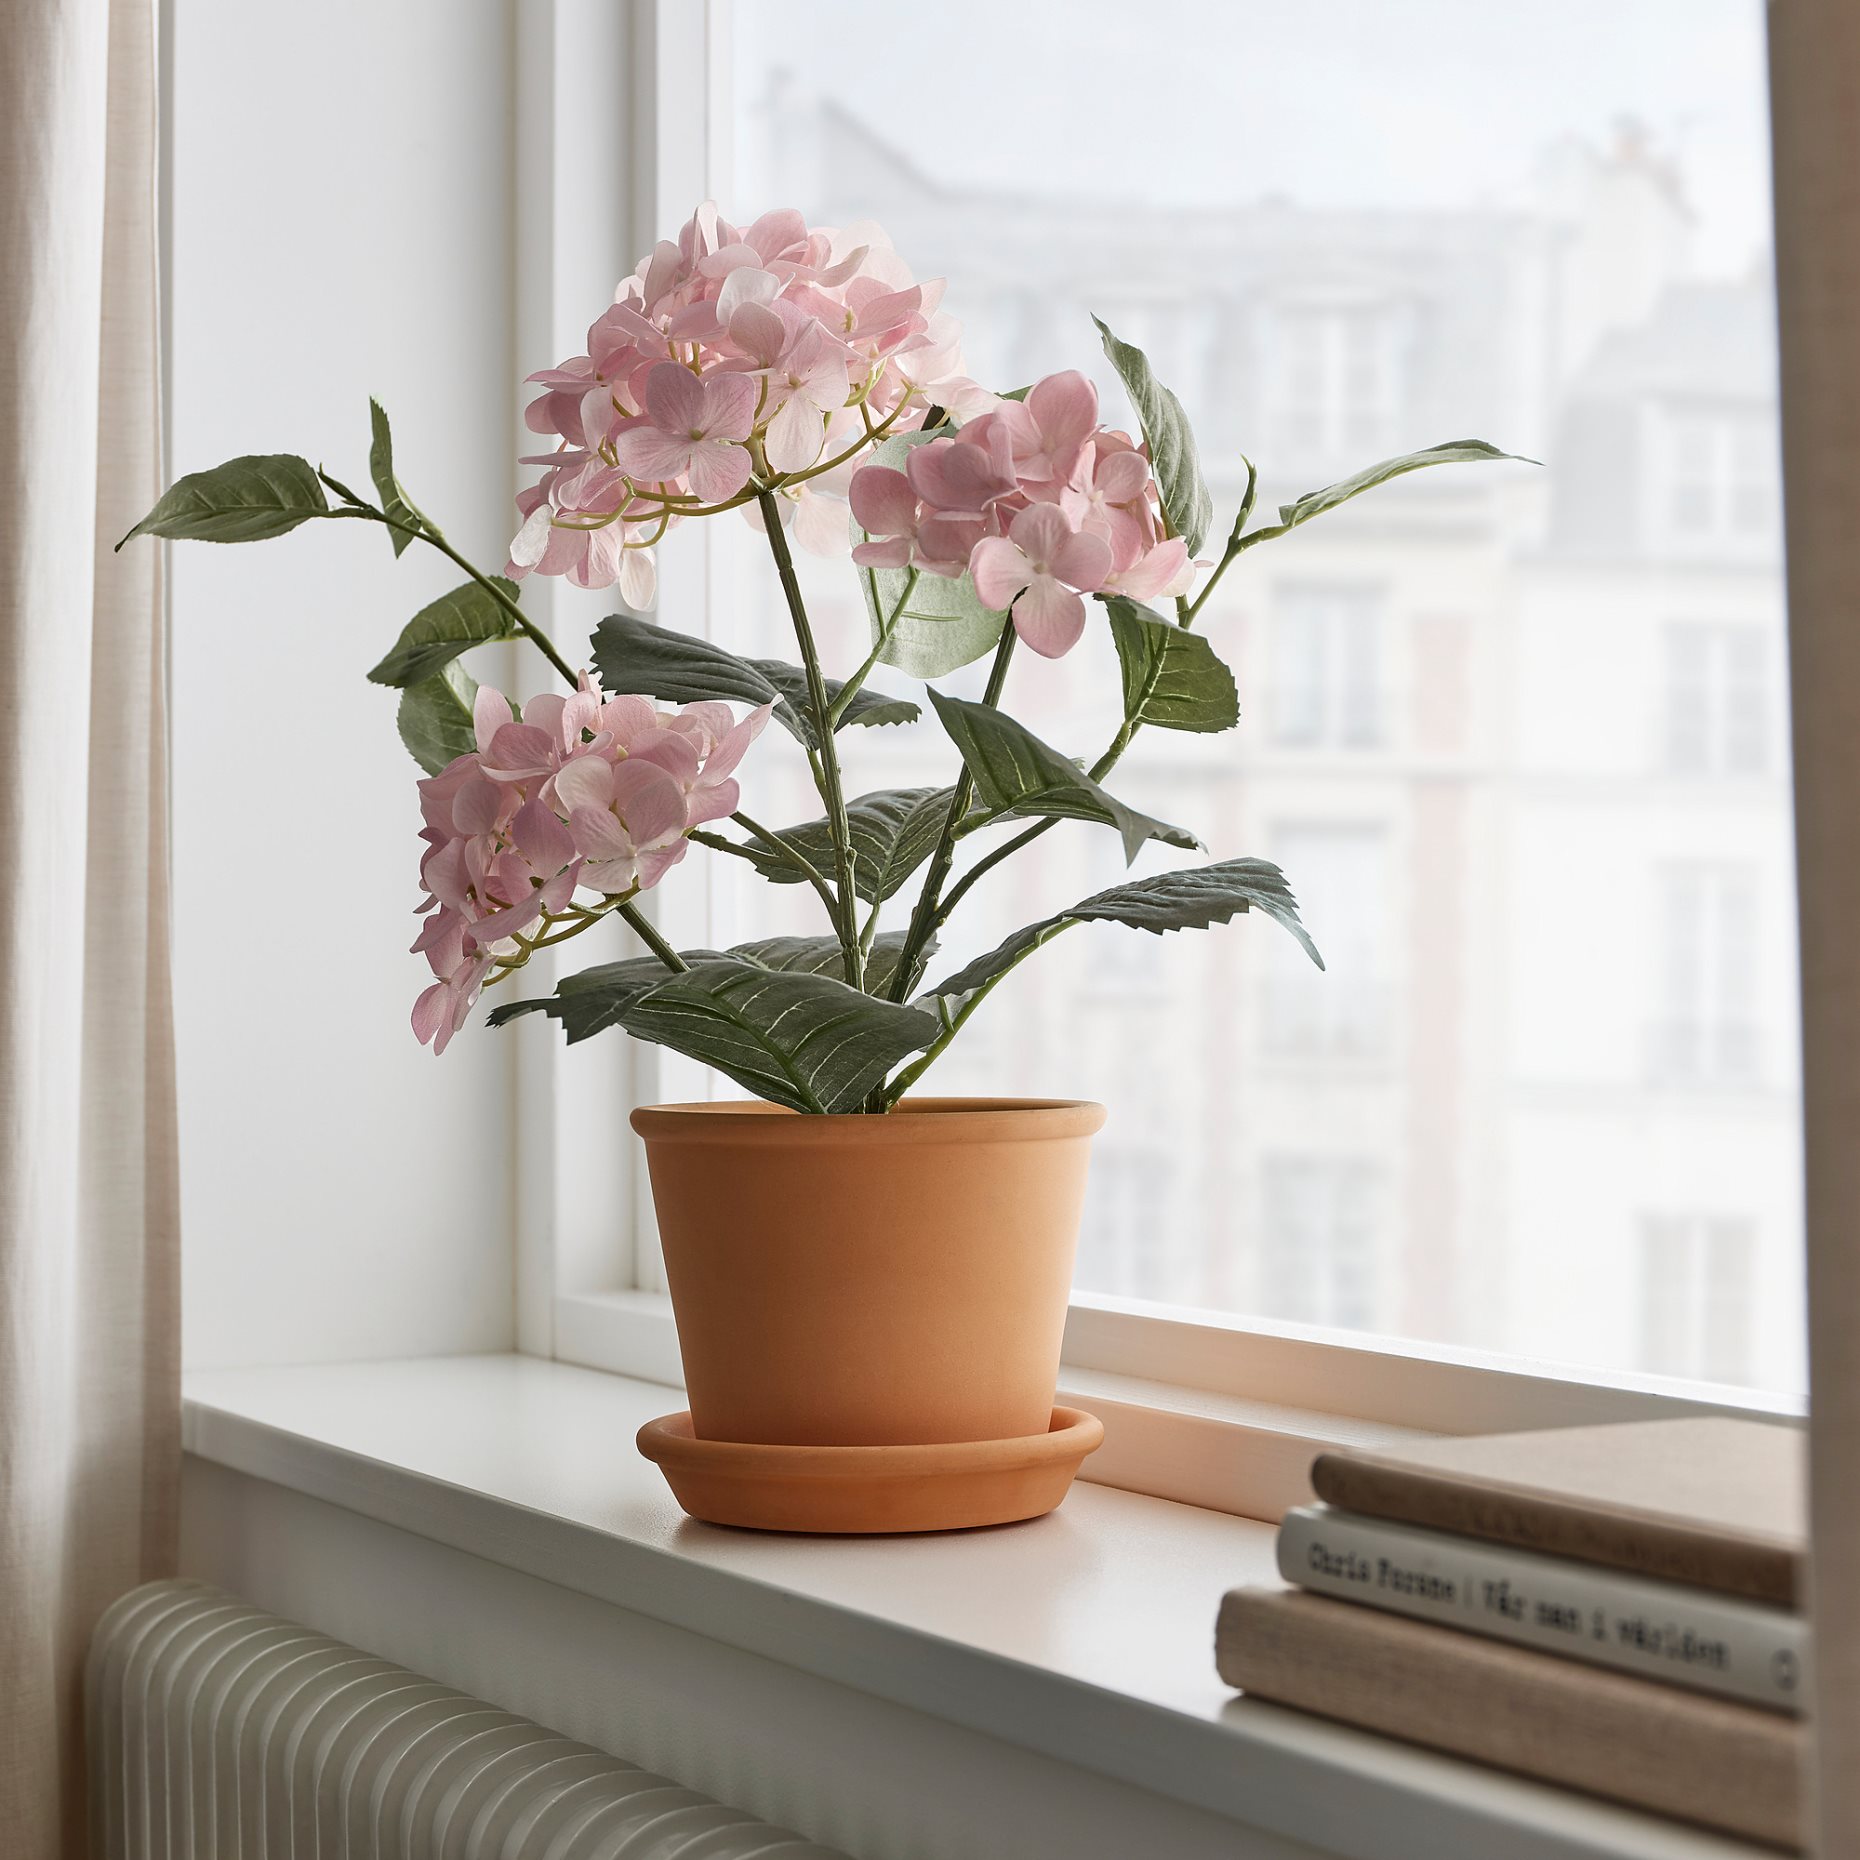 FEJKA, τεχνητό φυτό σε γλάστρα/εσωτερικού/εξωτερικού χώρου/Ορτανσία, 12 cm, 005.357.28